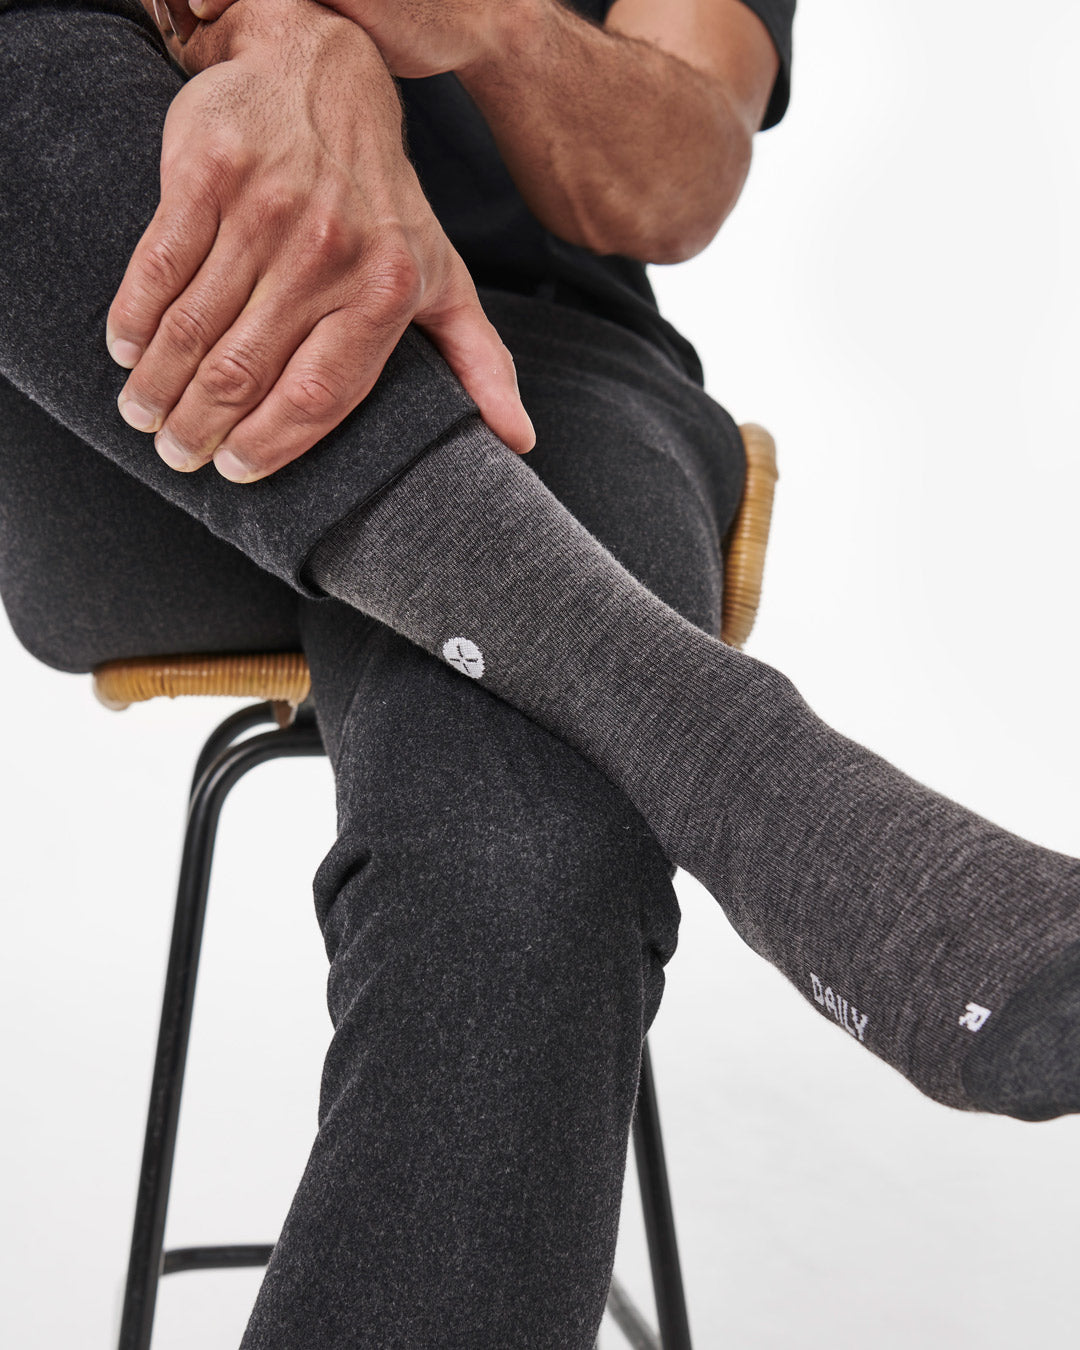 Sitting man with compression socks.